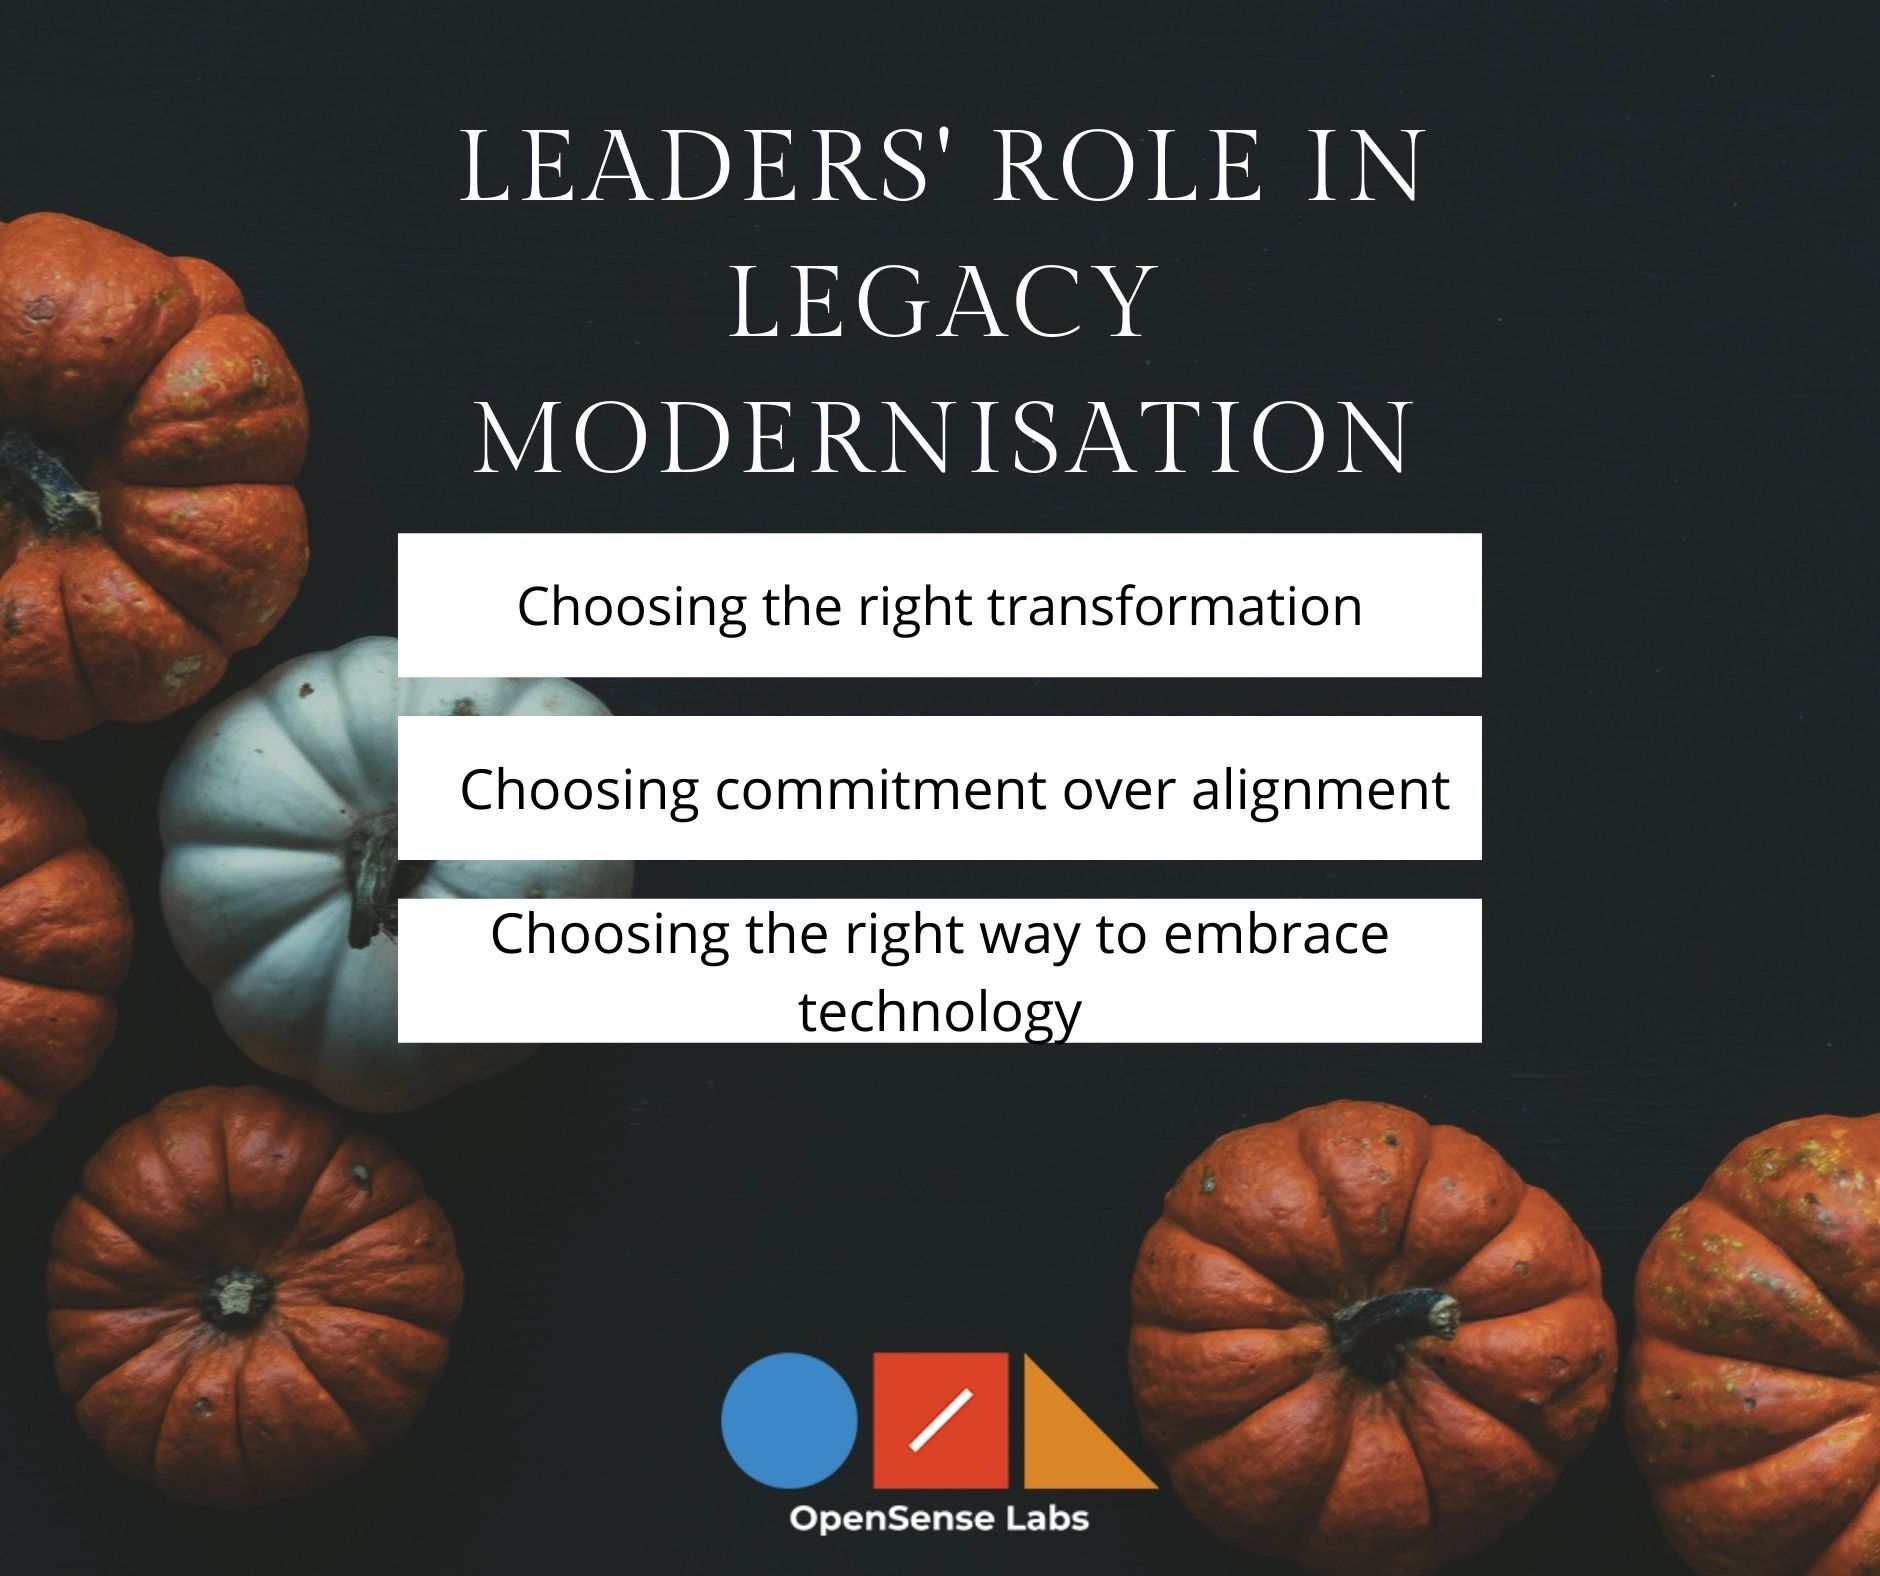 Illustration diagram describing leaders' role in legacy modernization